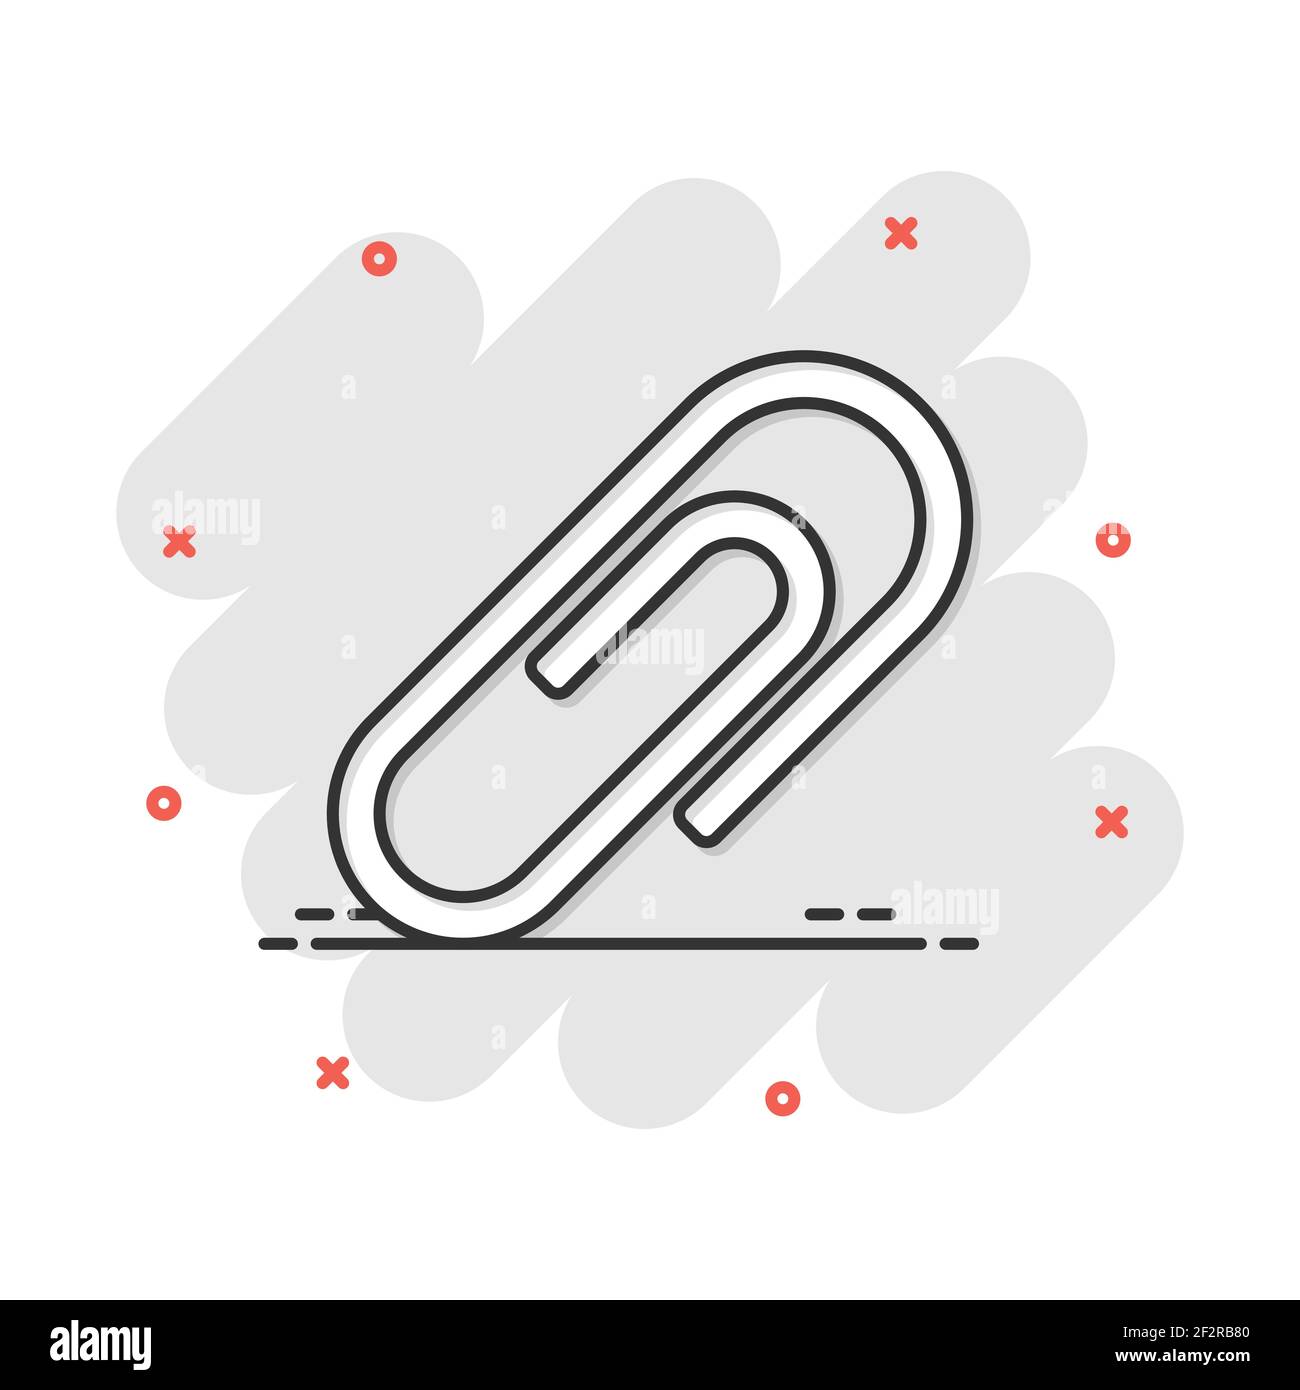 Vector cartoon paper clip attachment icon in comic style. Paperclip concept illustration pictogram. Attach file business splash effect concept. Stock Vector